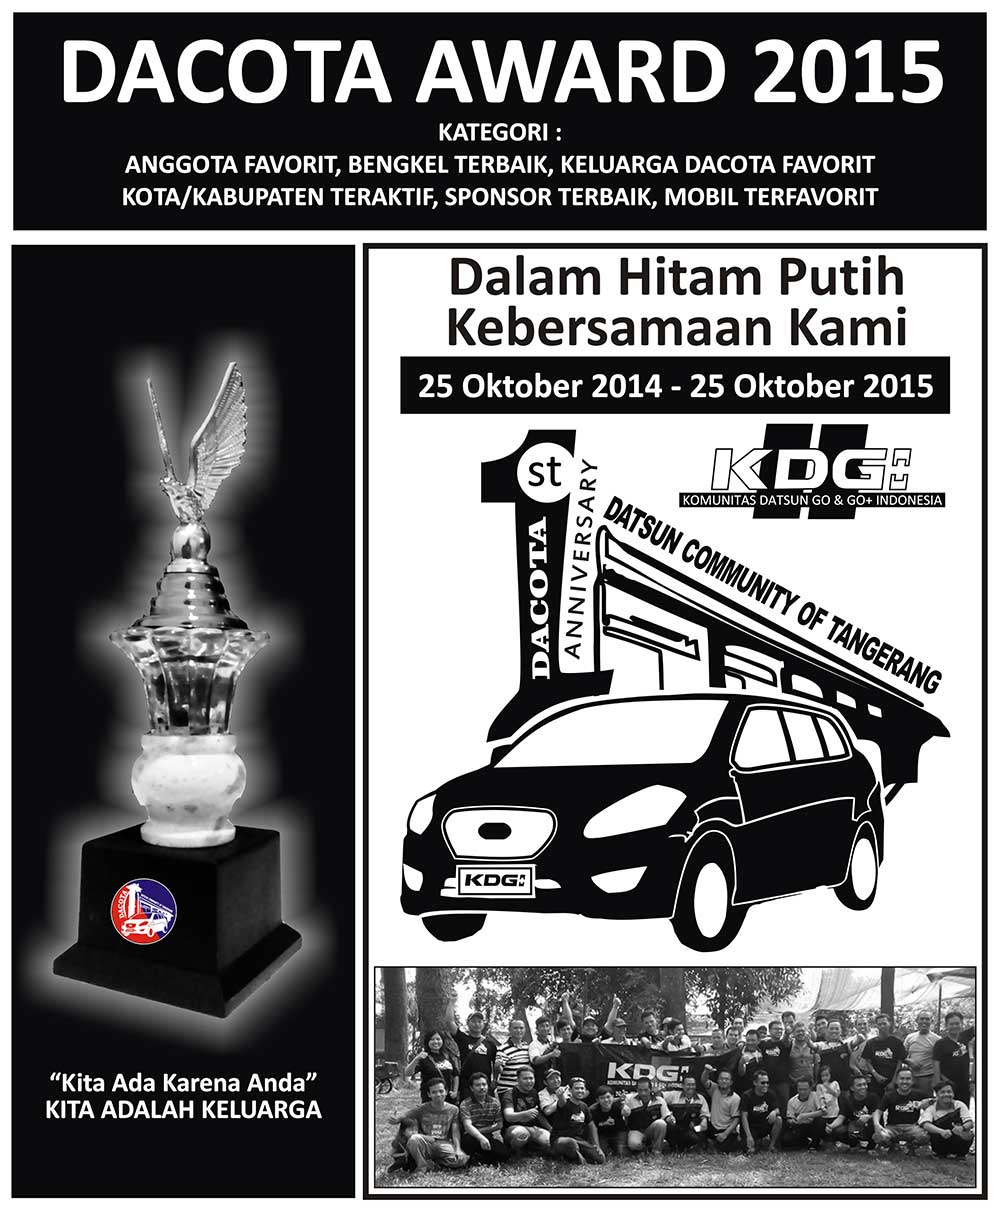 Datsun, Datsun GO GO+ Community Tangerang Dacota HUT 1 Award: Berbagai Kegiatan Positif Iringi 1 Tahun Usia Komunitas Datsun GO dan GO+ Tangerang